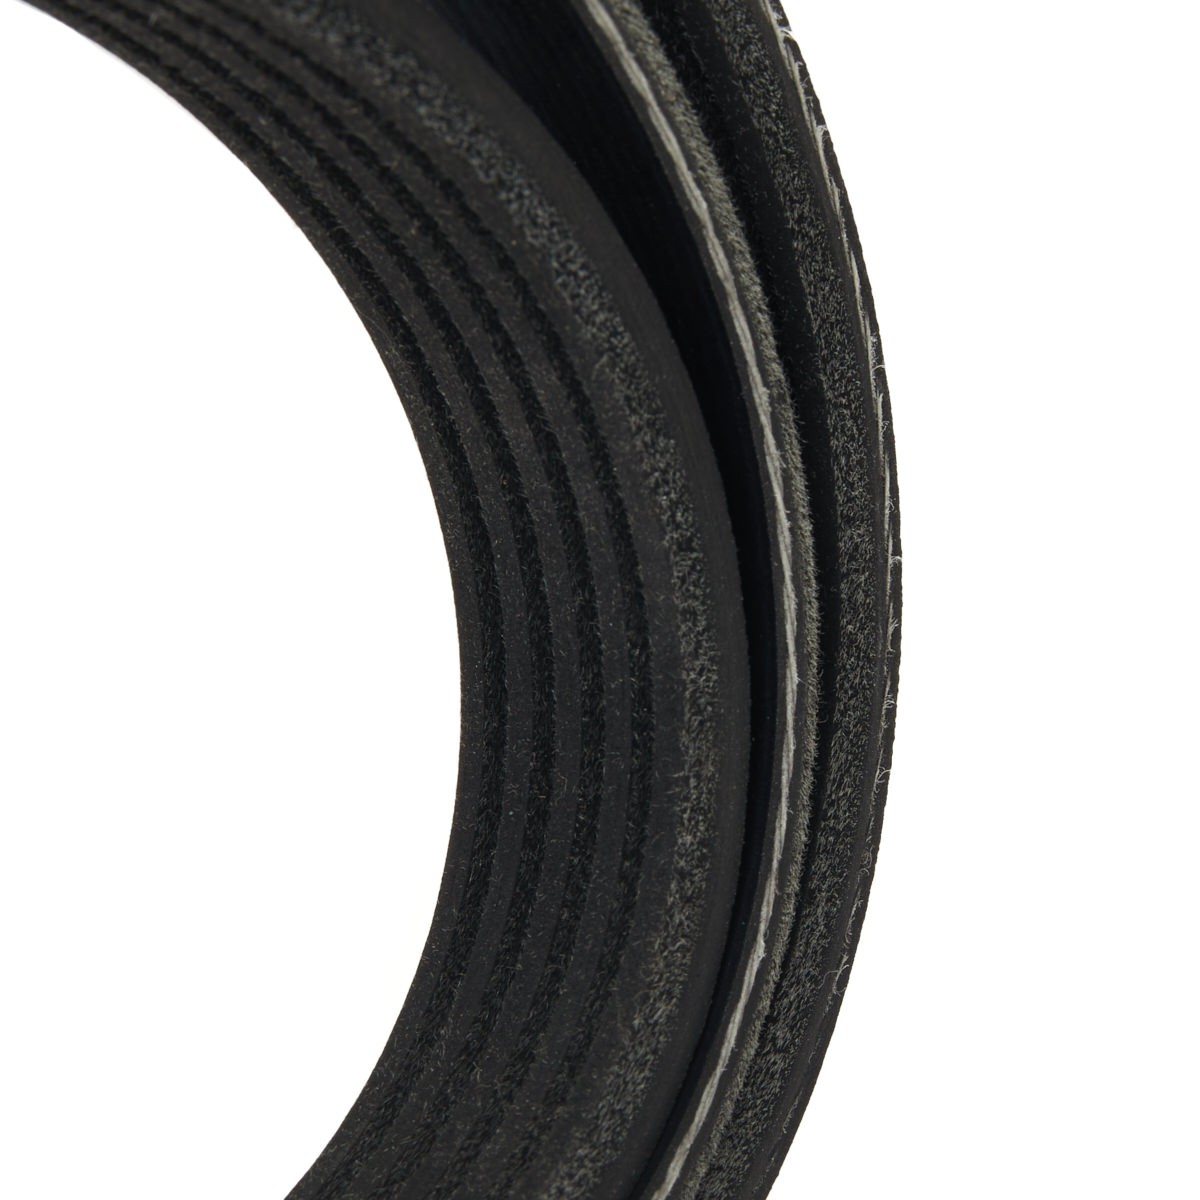 RIDEX 305P0575 Aux belt 1510mm, 5, Polyester, EPDM (ethylene propylene diene Monomer (M-class) rubber)